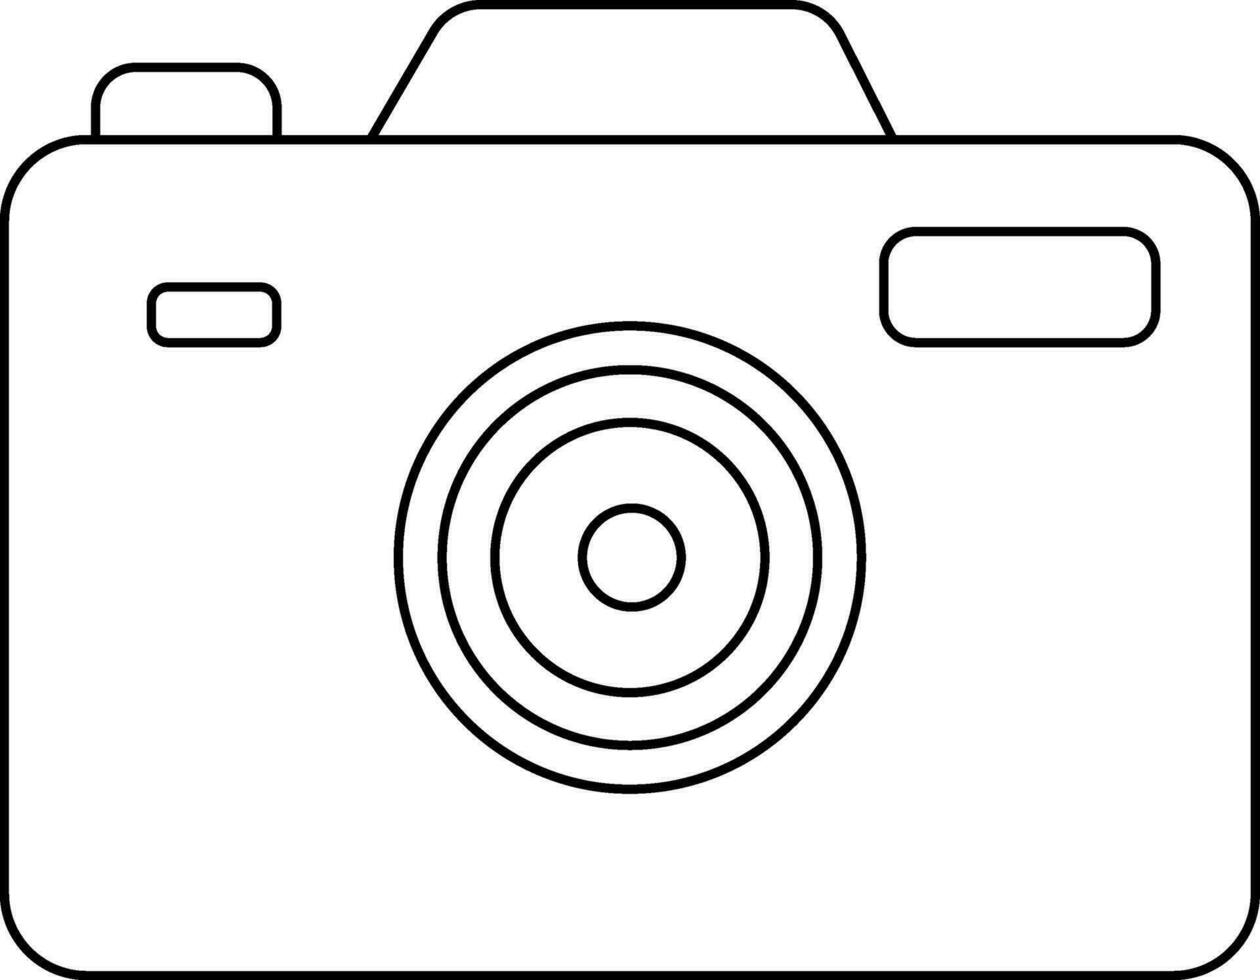 Stylish black line art camera icon. vector